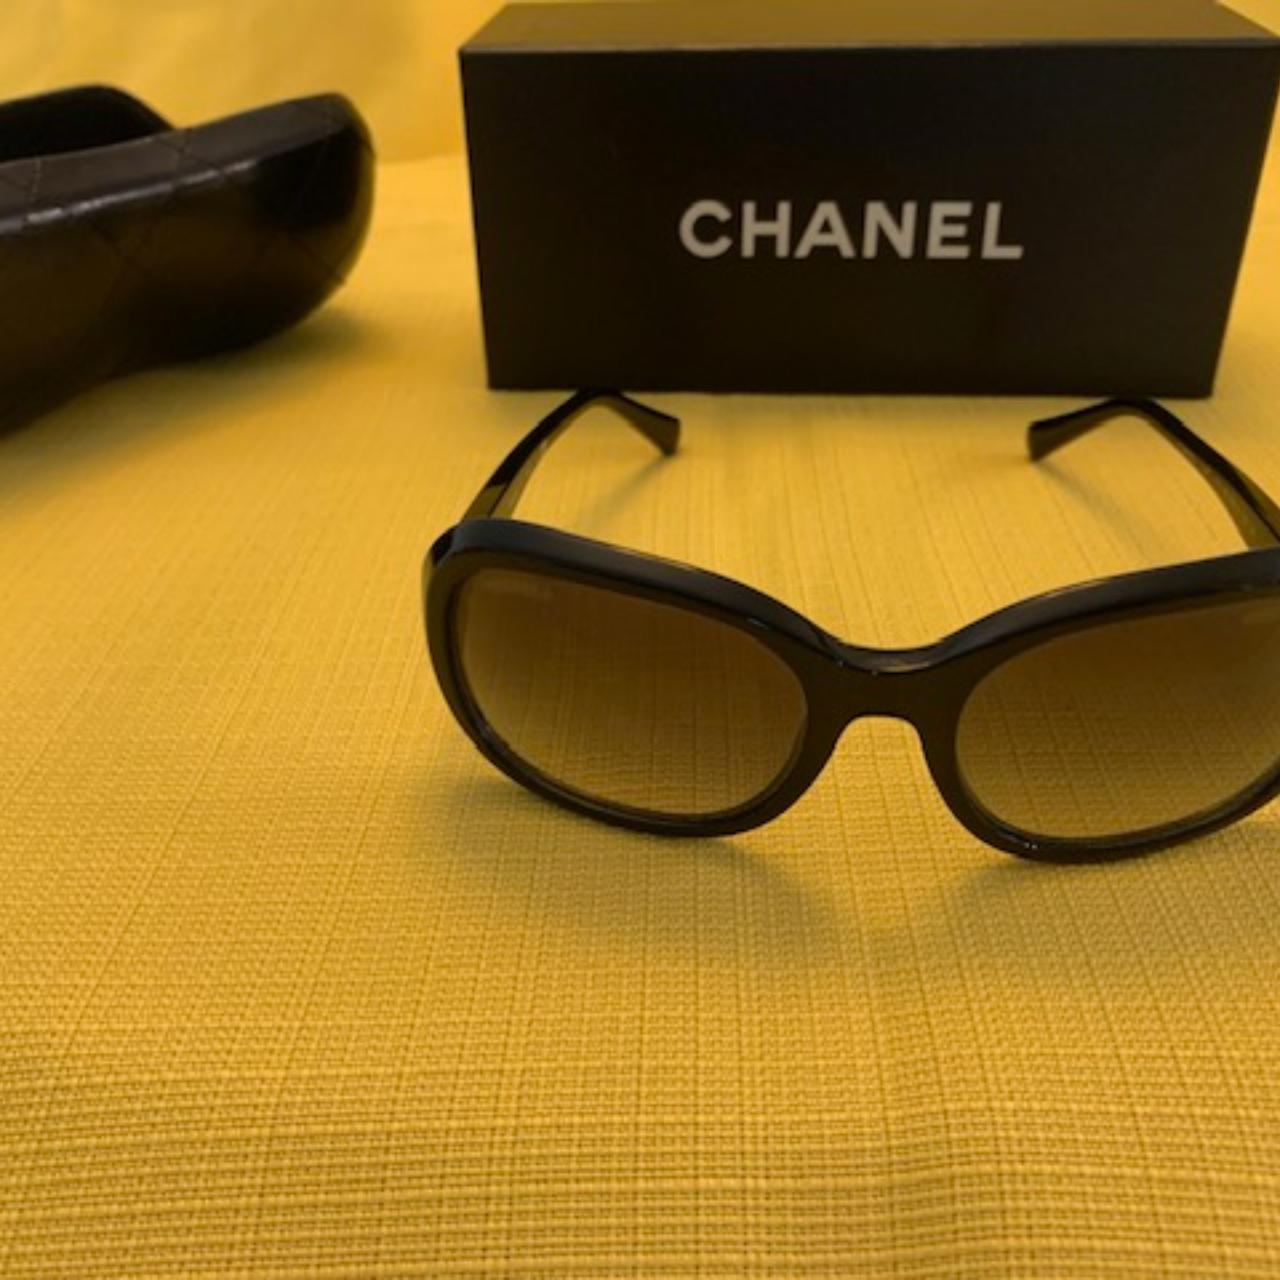 Chanel Sunglasses Model 5286 Black acetate Chanel... - Depop